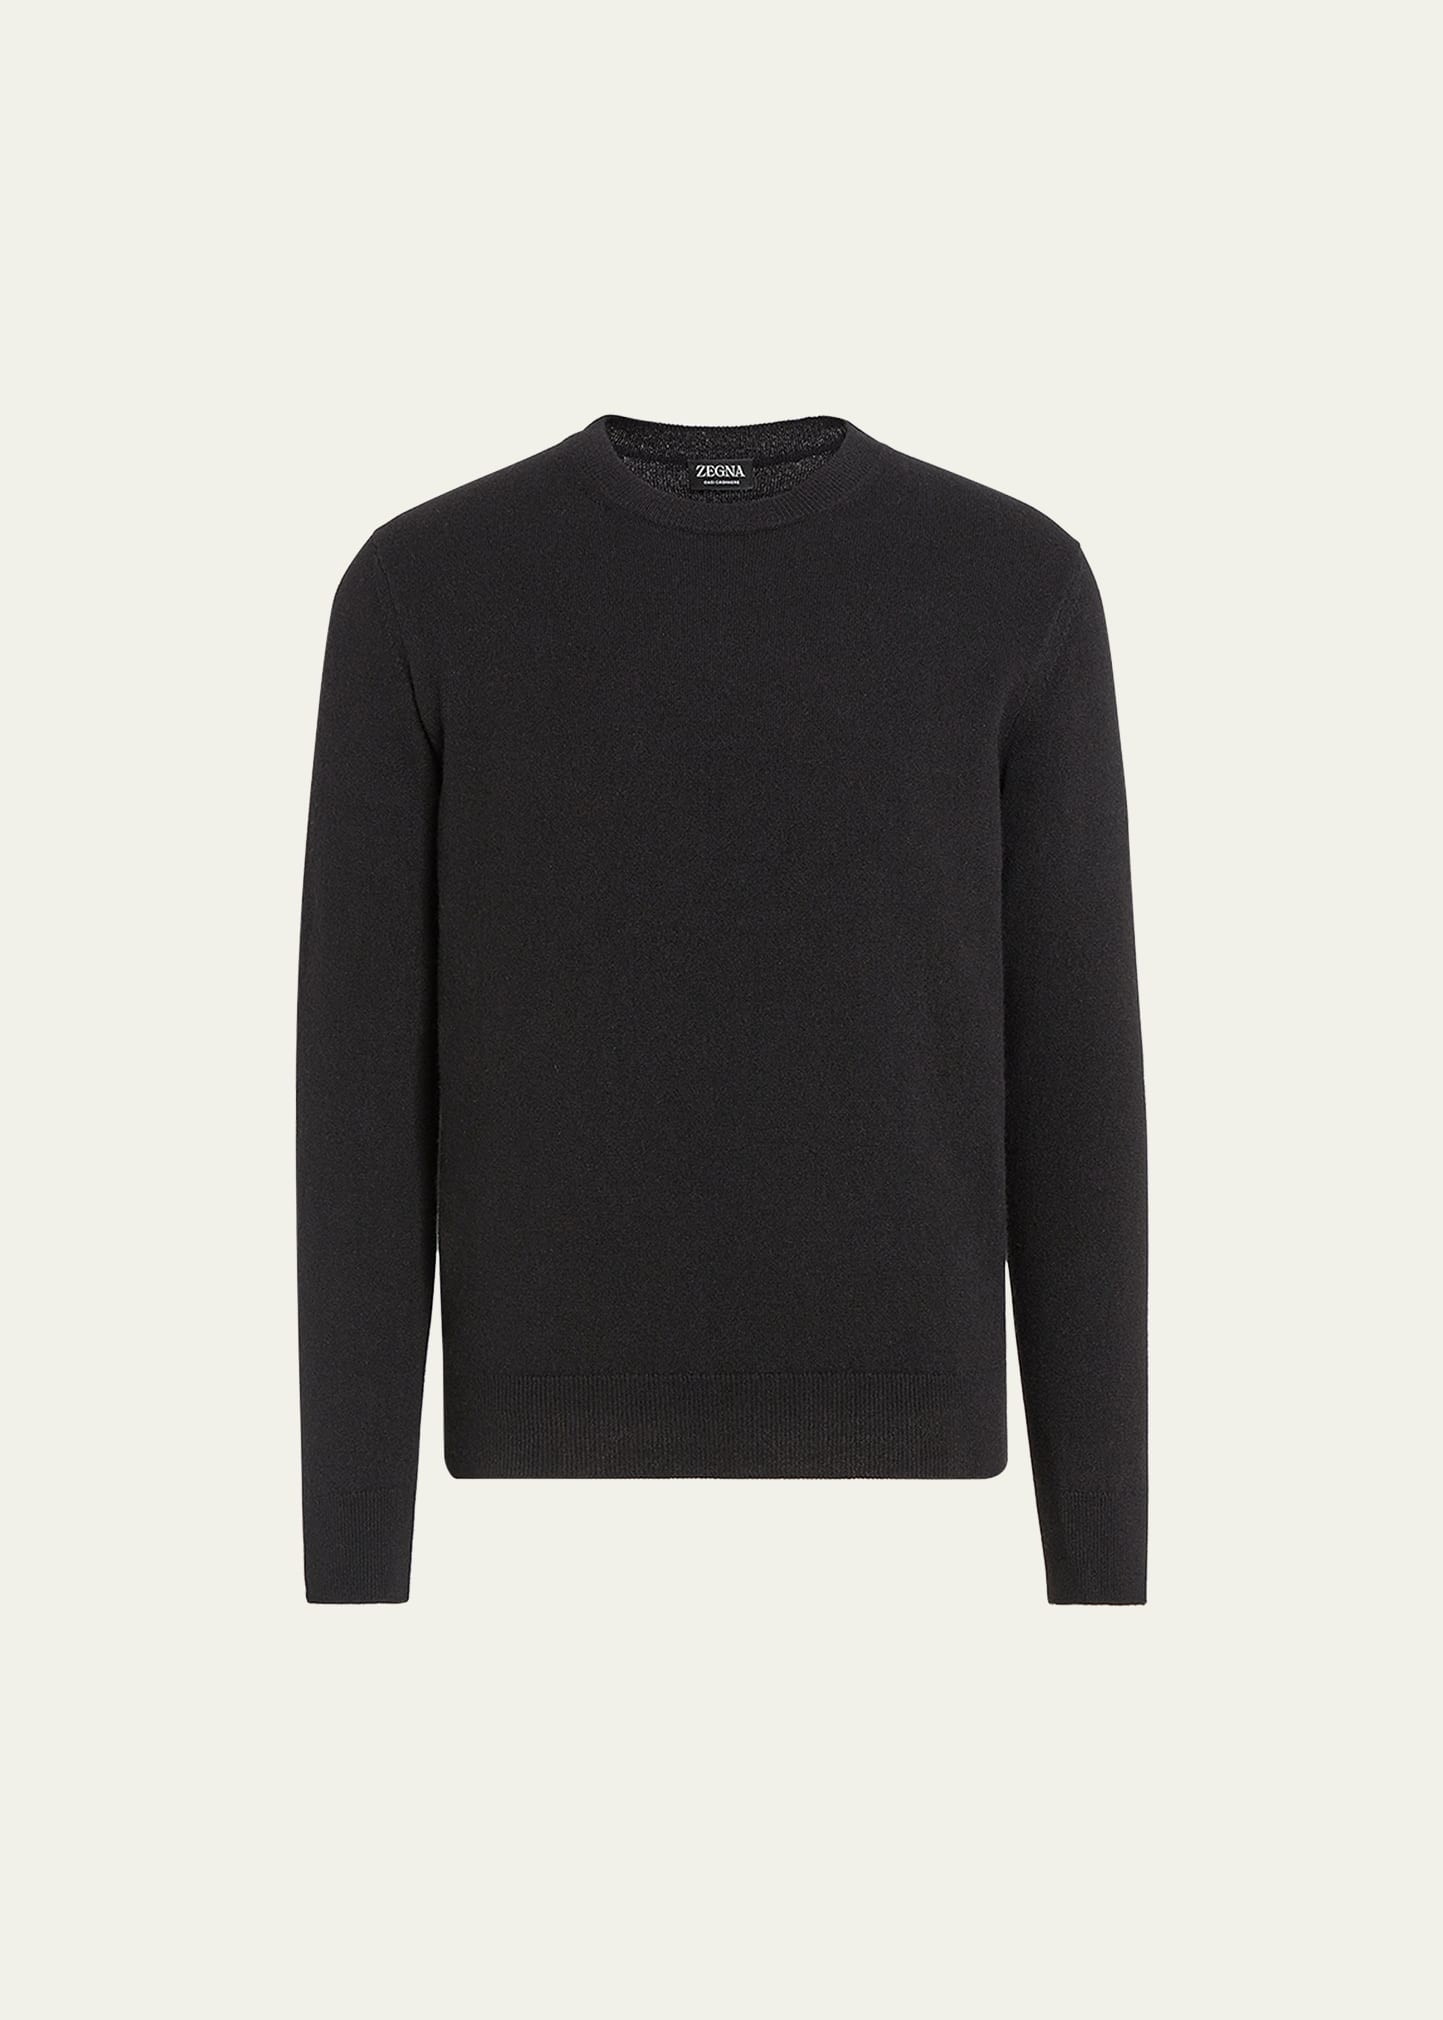 Zegna Men's Cashmere Crewneck Sweater In Black Solid